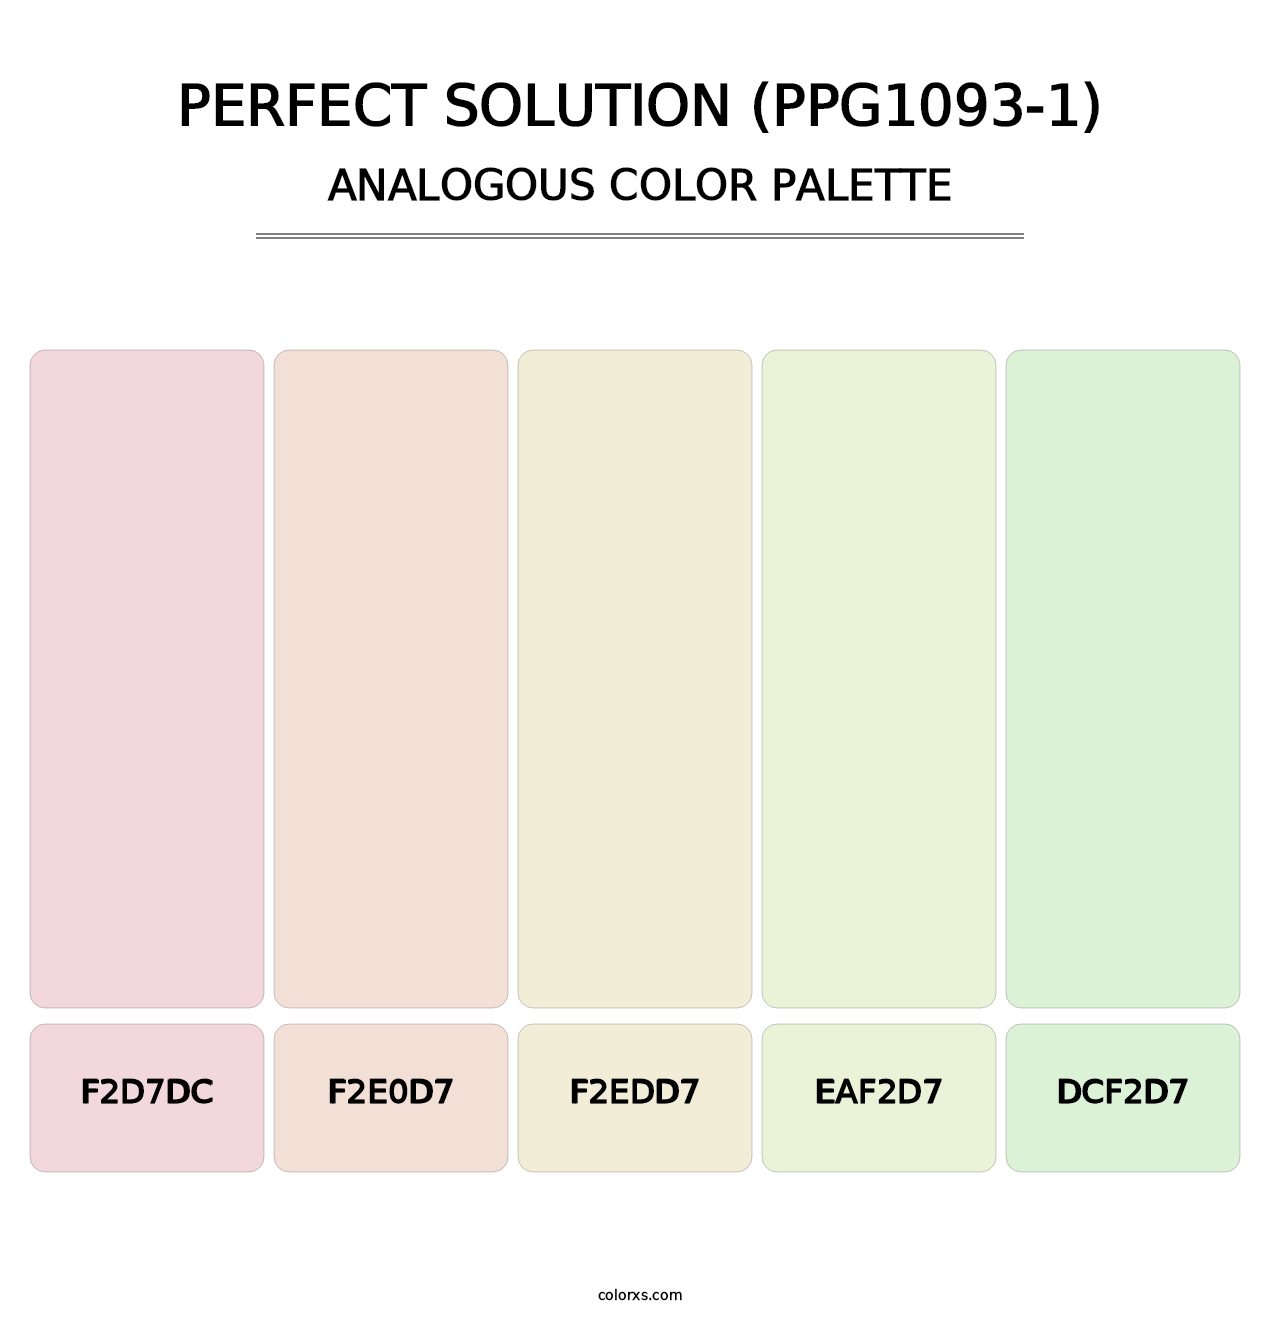 Perfect Solution (PPG1093-1) - Analogous Color Palette